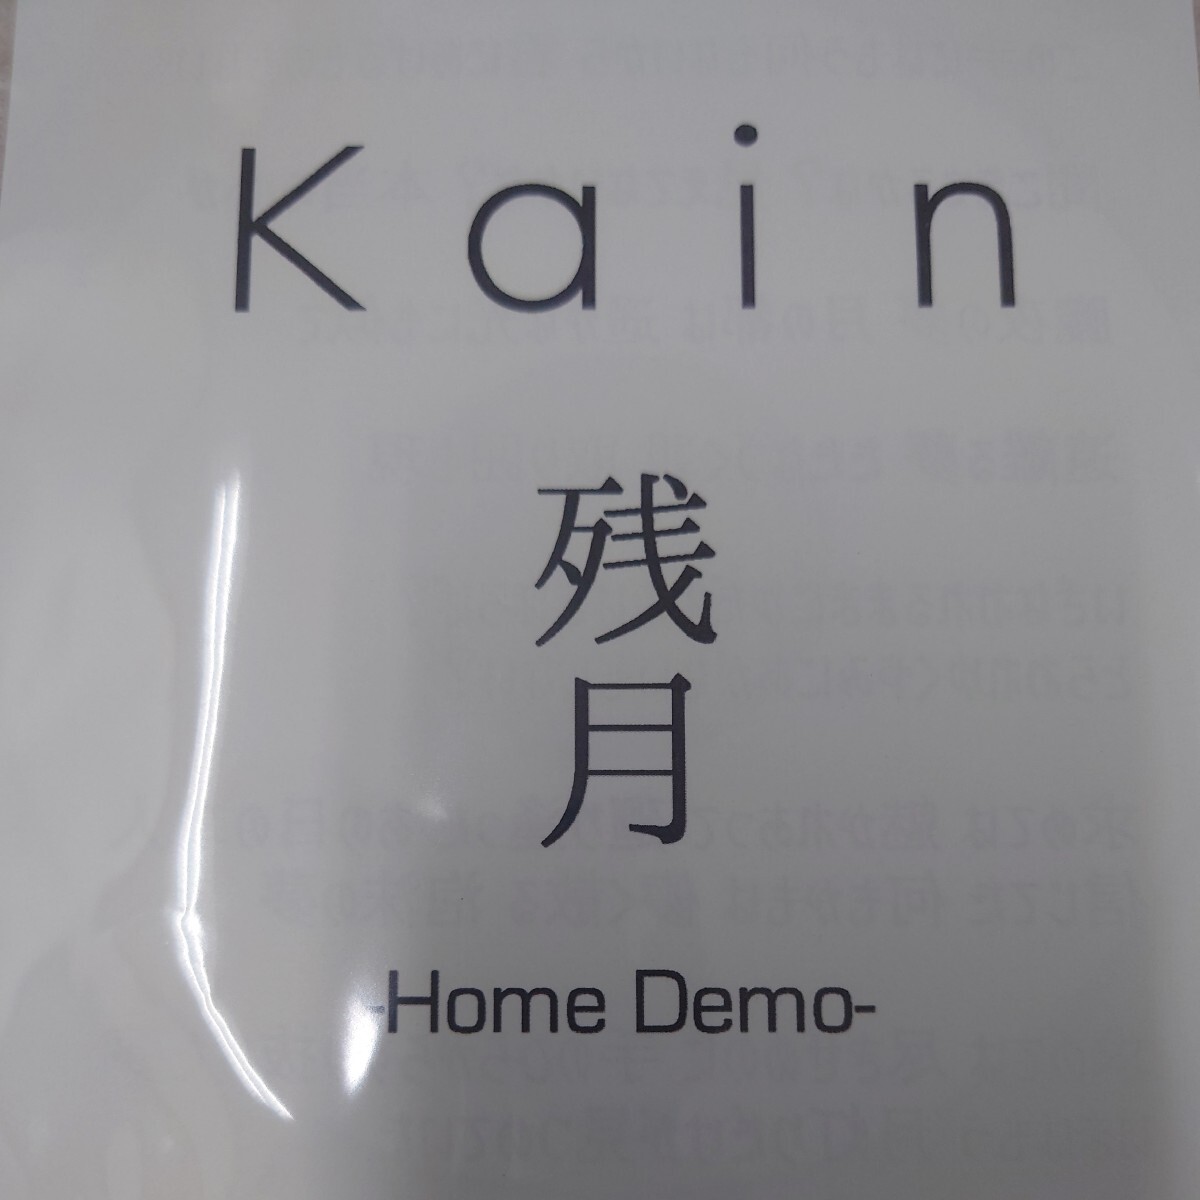 Kαin 残月 Home Demo 限定配布CD-R 未発表デモ音源_画像1